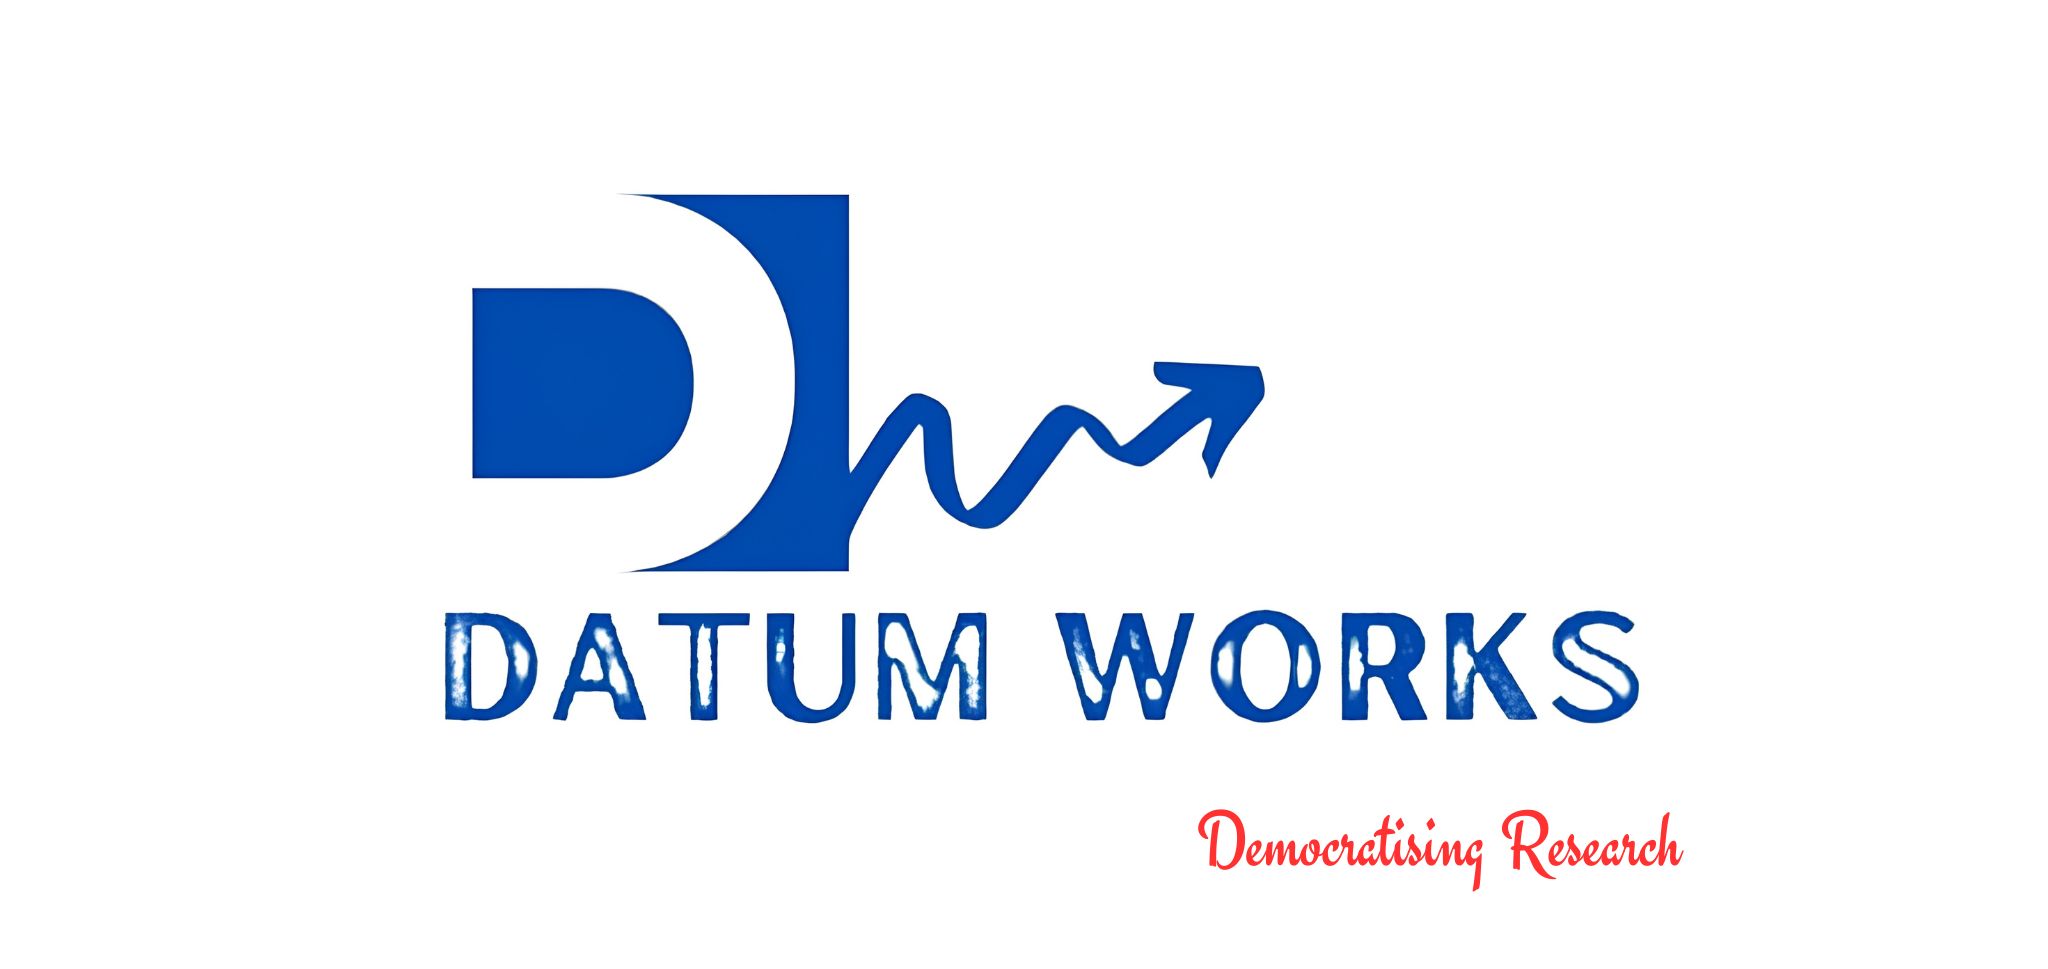 dutum works